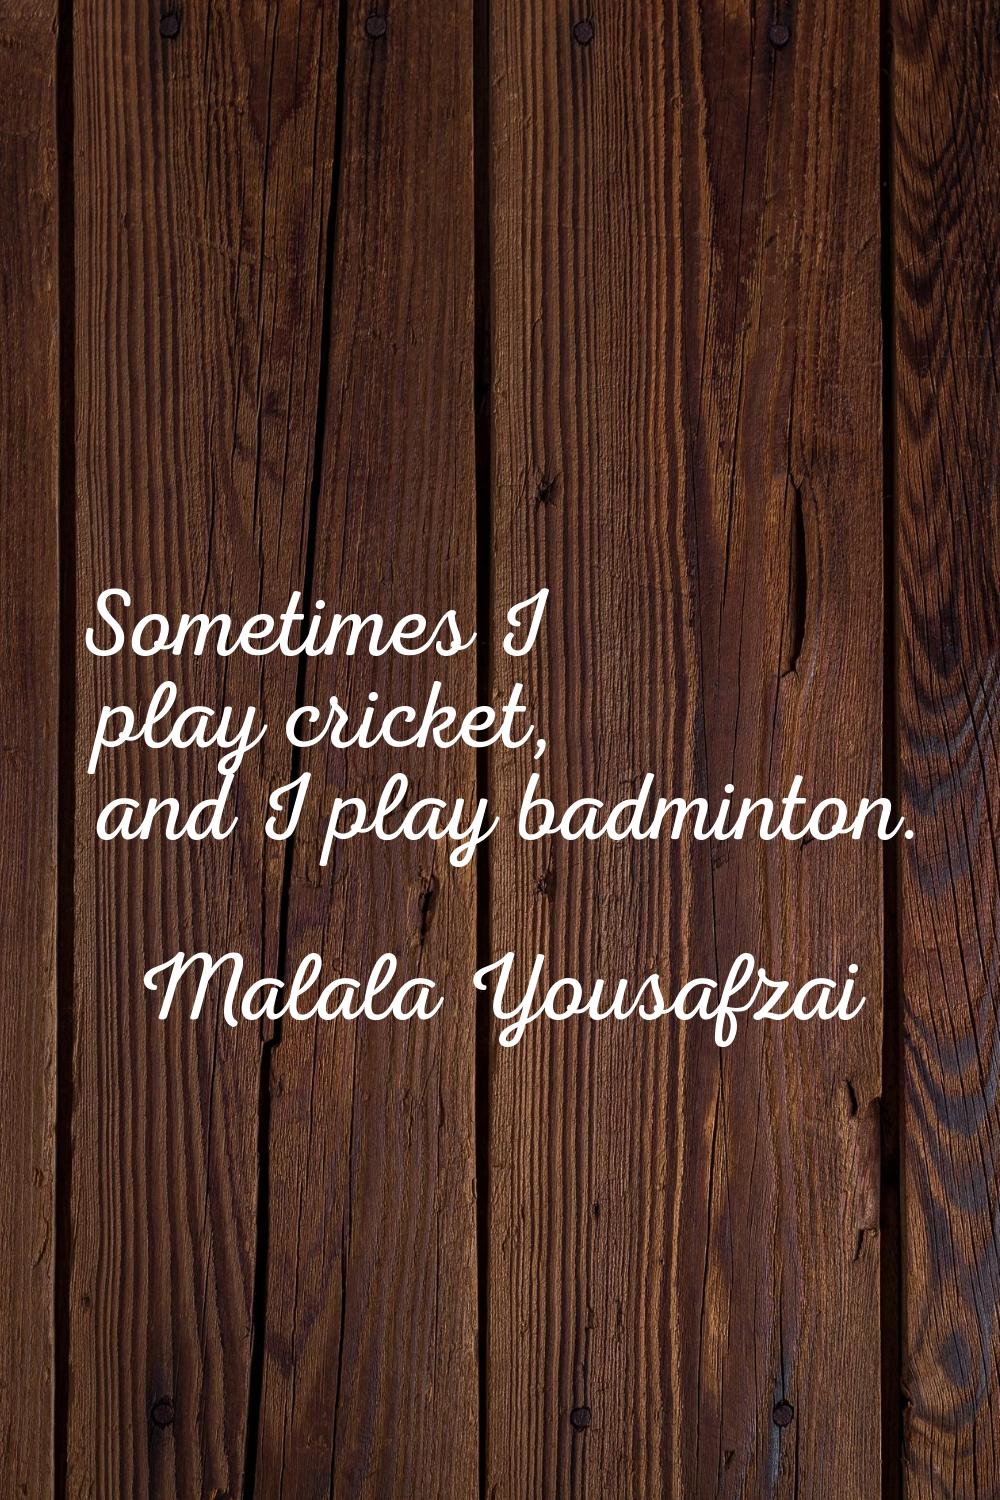 Sometimes I play cricket, and I play badminton.